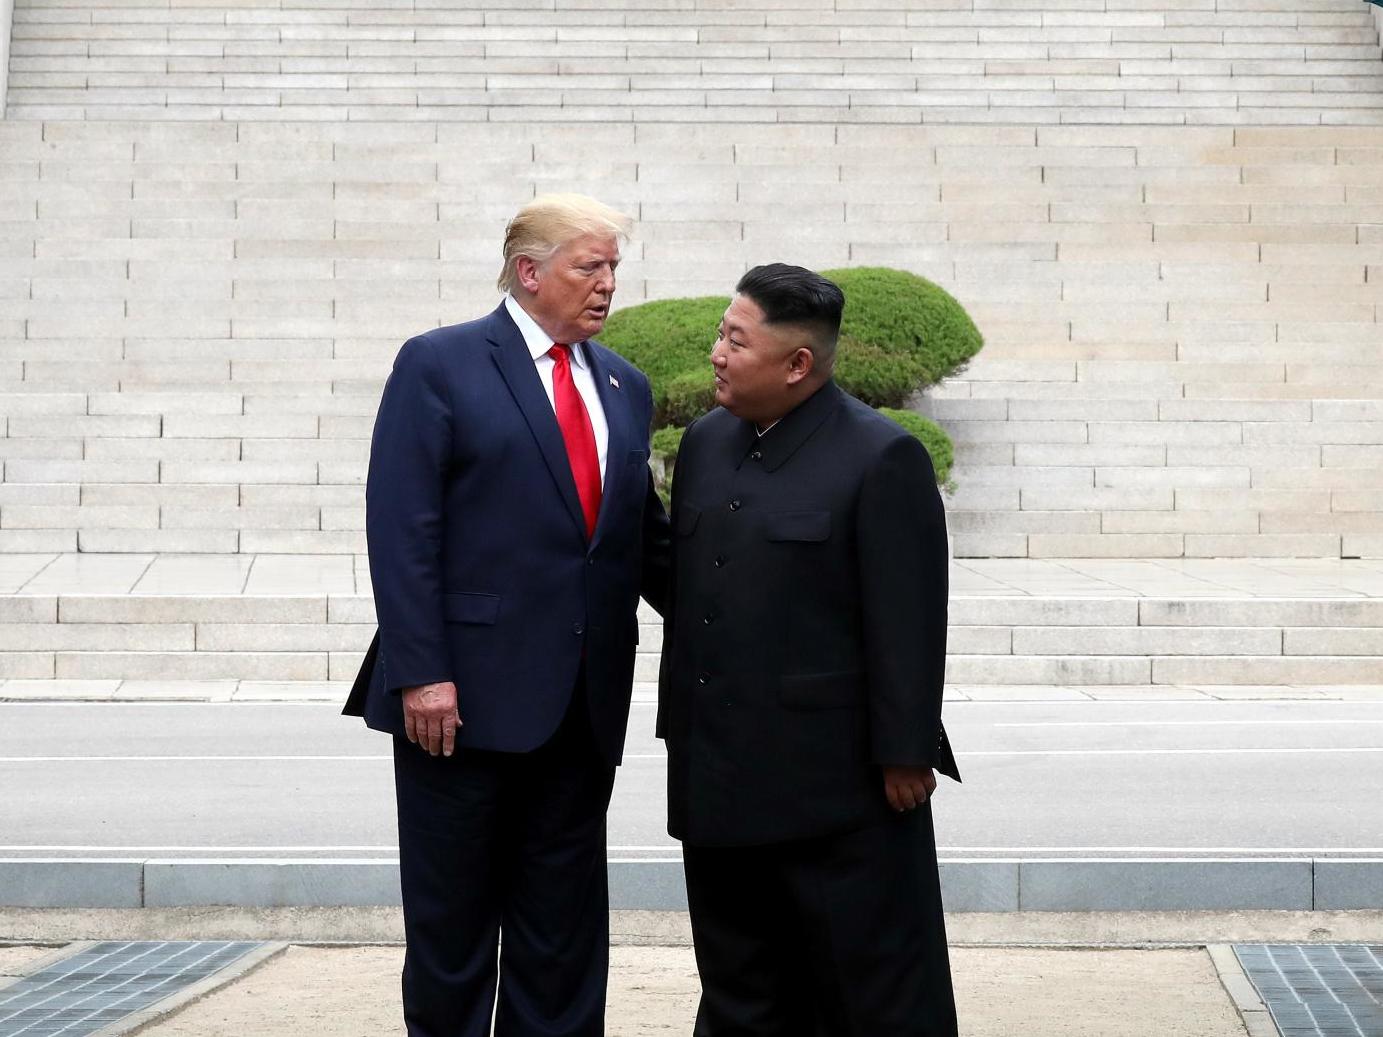 Trump and Kim Jong Un during a previous meeting